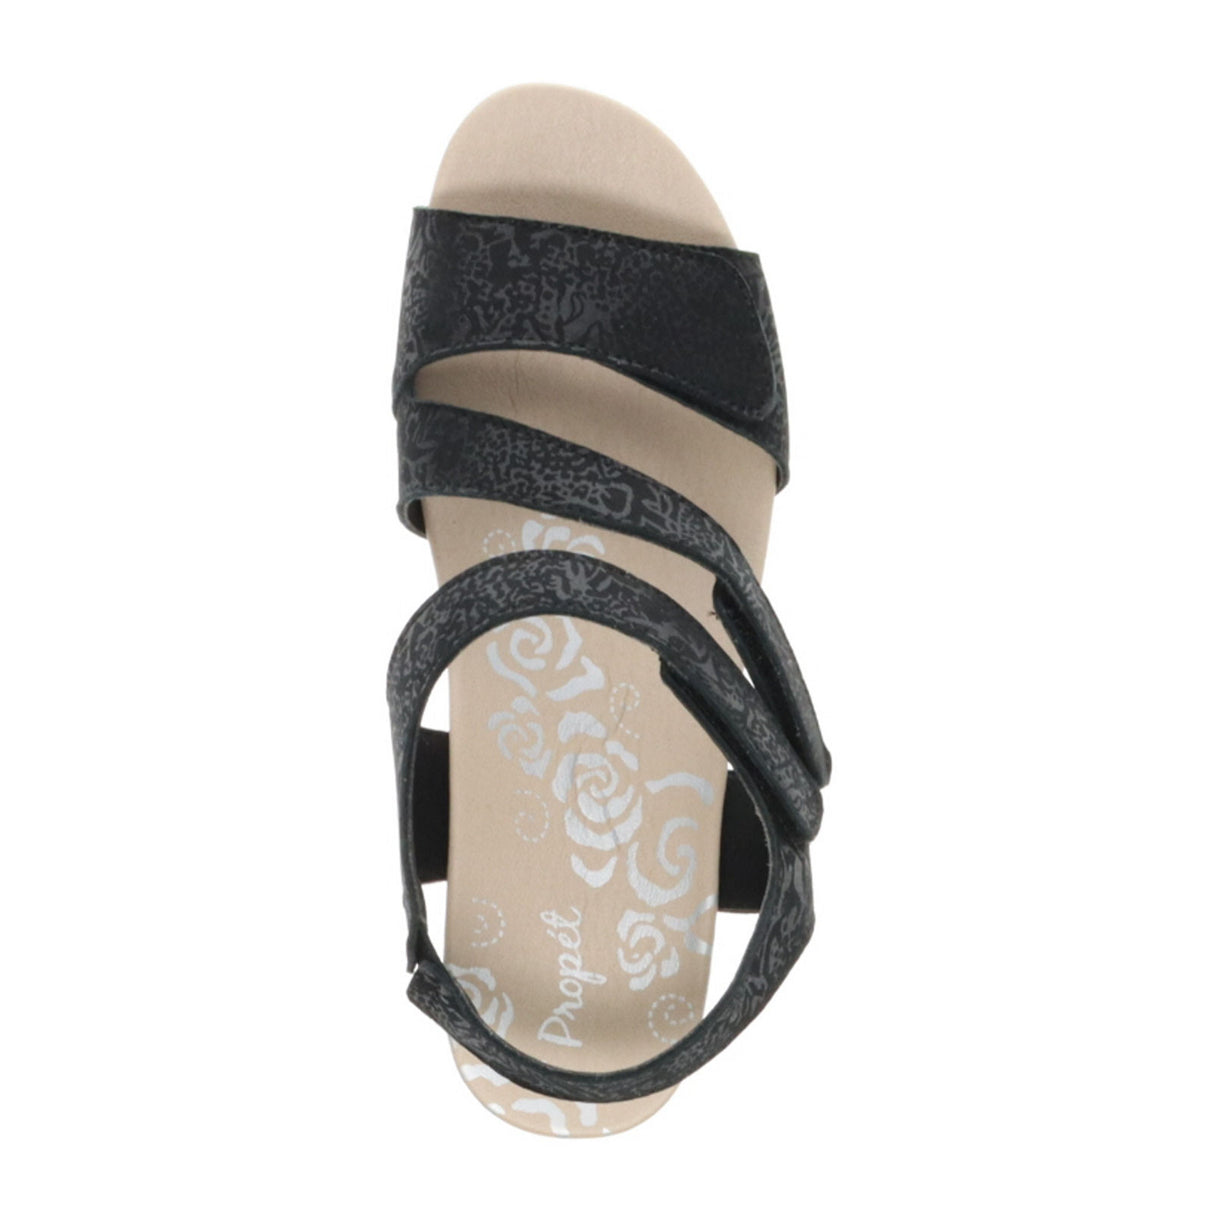 Propet Millie Wedge Sandal (Women) - Black  - The Heel Shoe Fitters